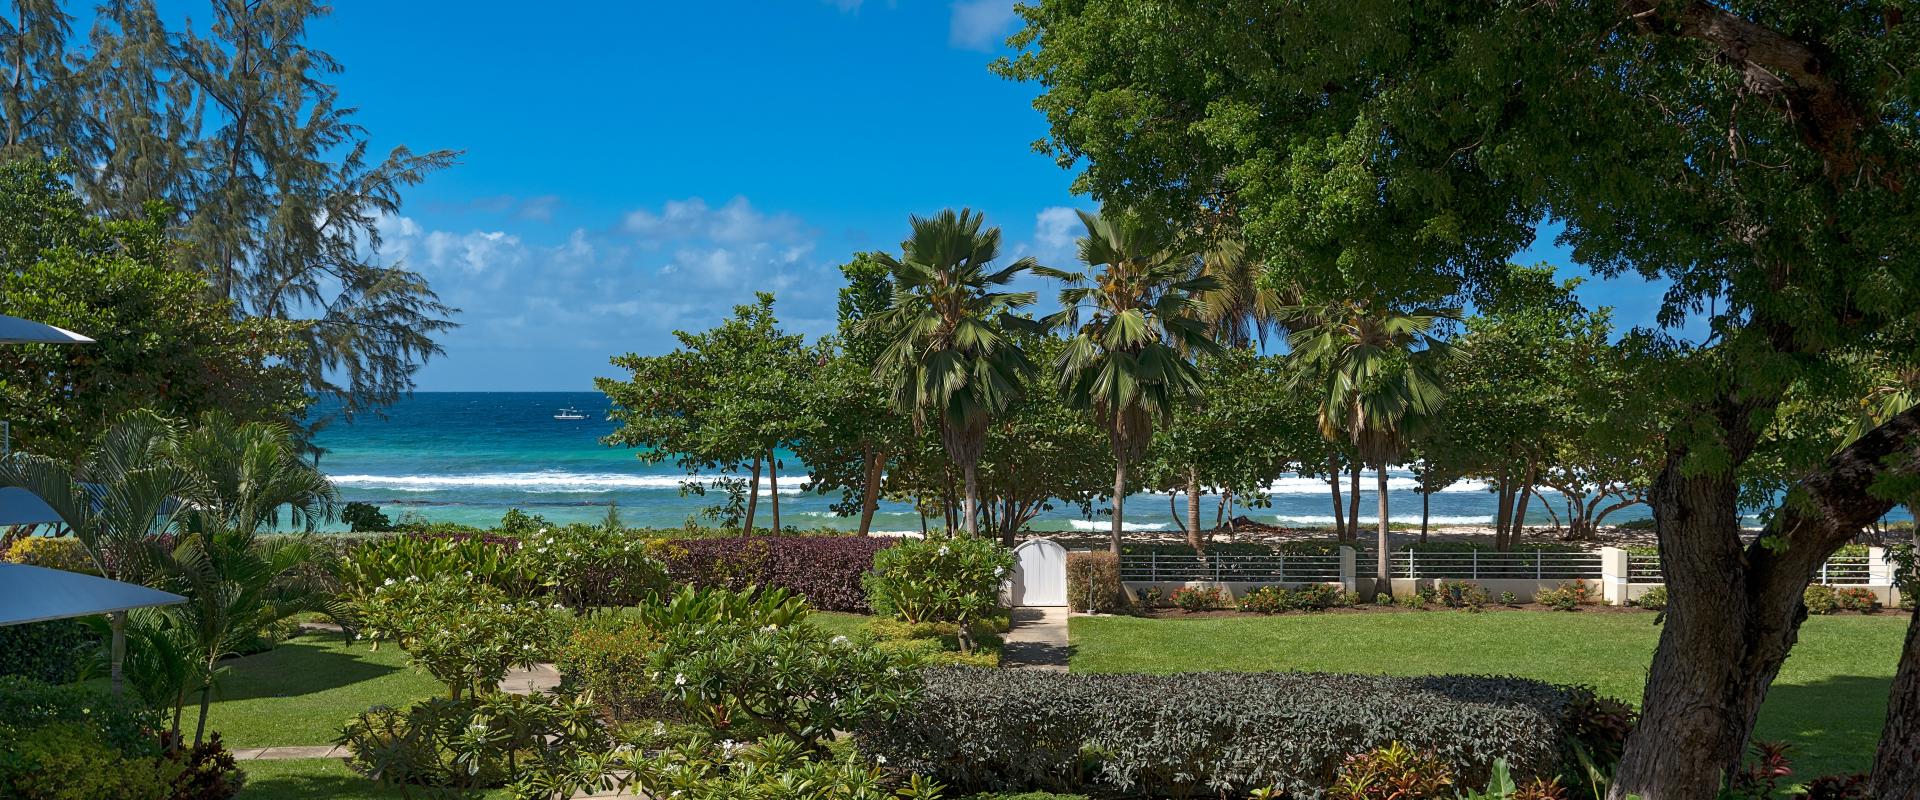 Palm Beach 204 Barbados Beachfront Condo Rental View from Patio of Ocean and Gardens